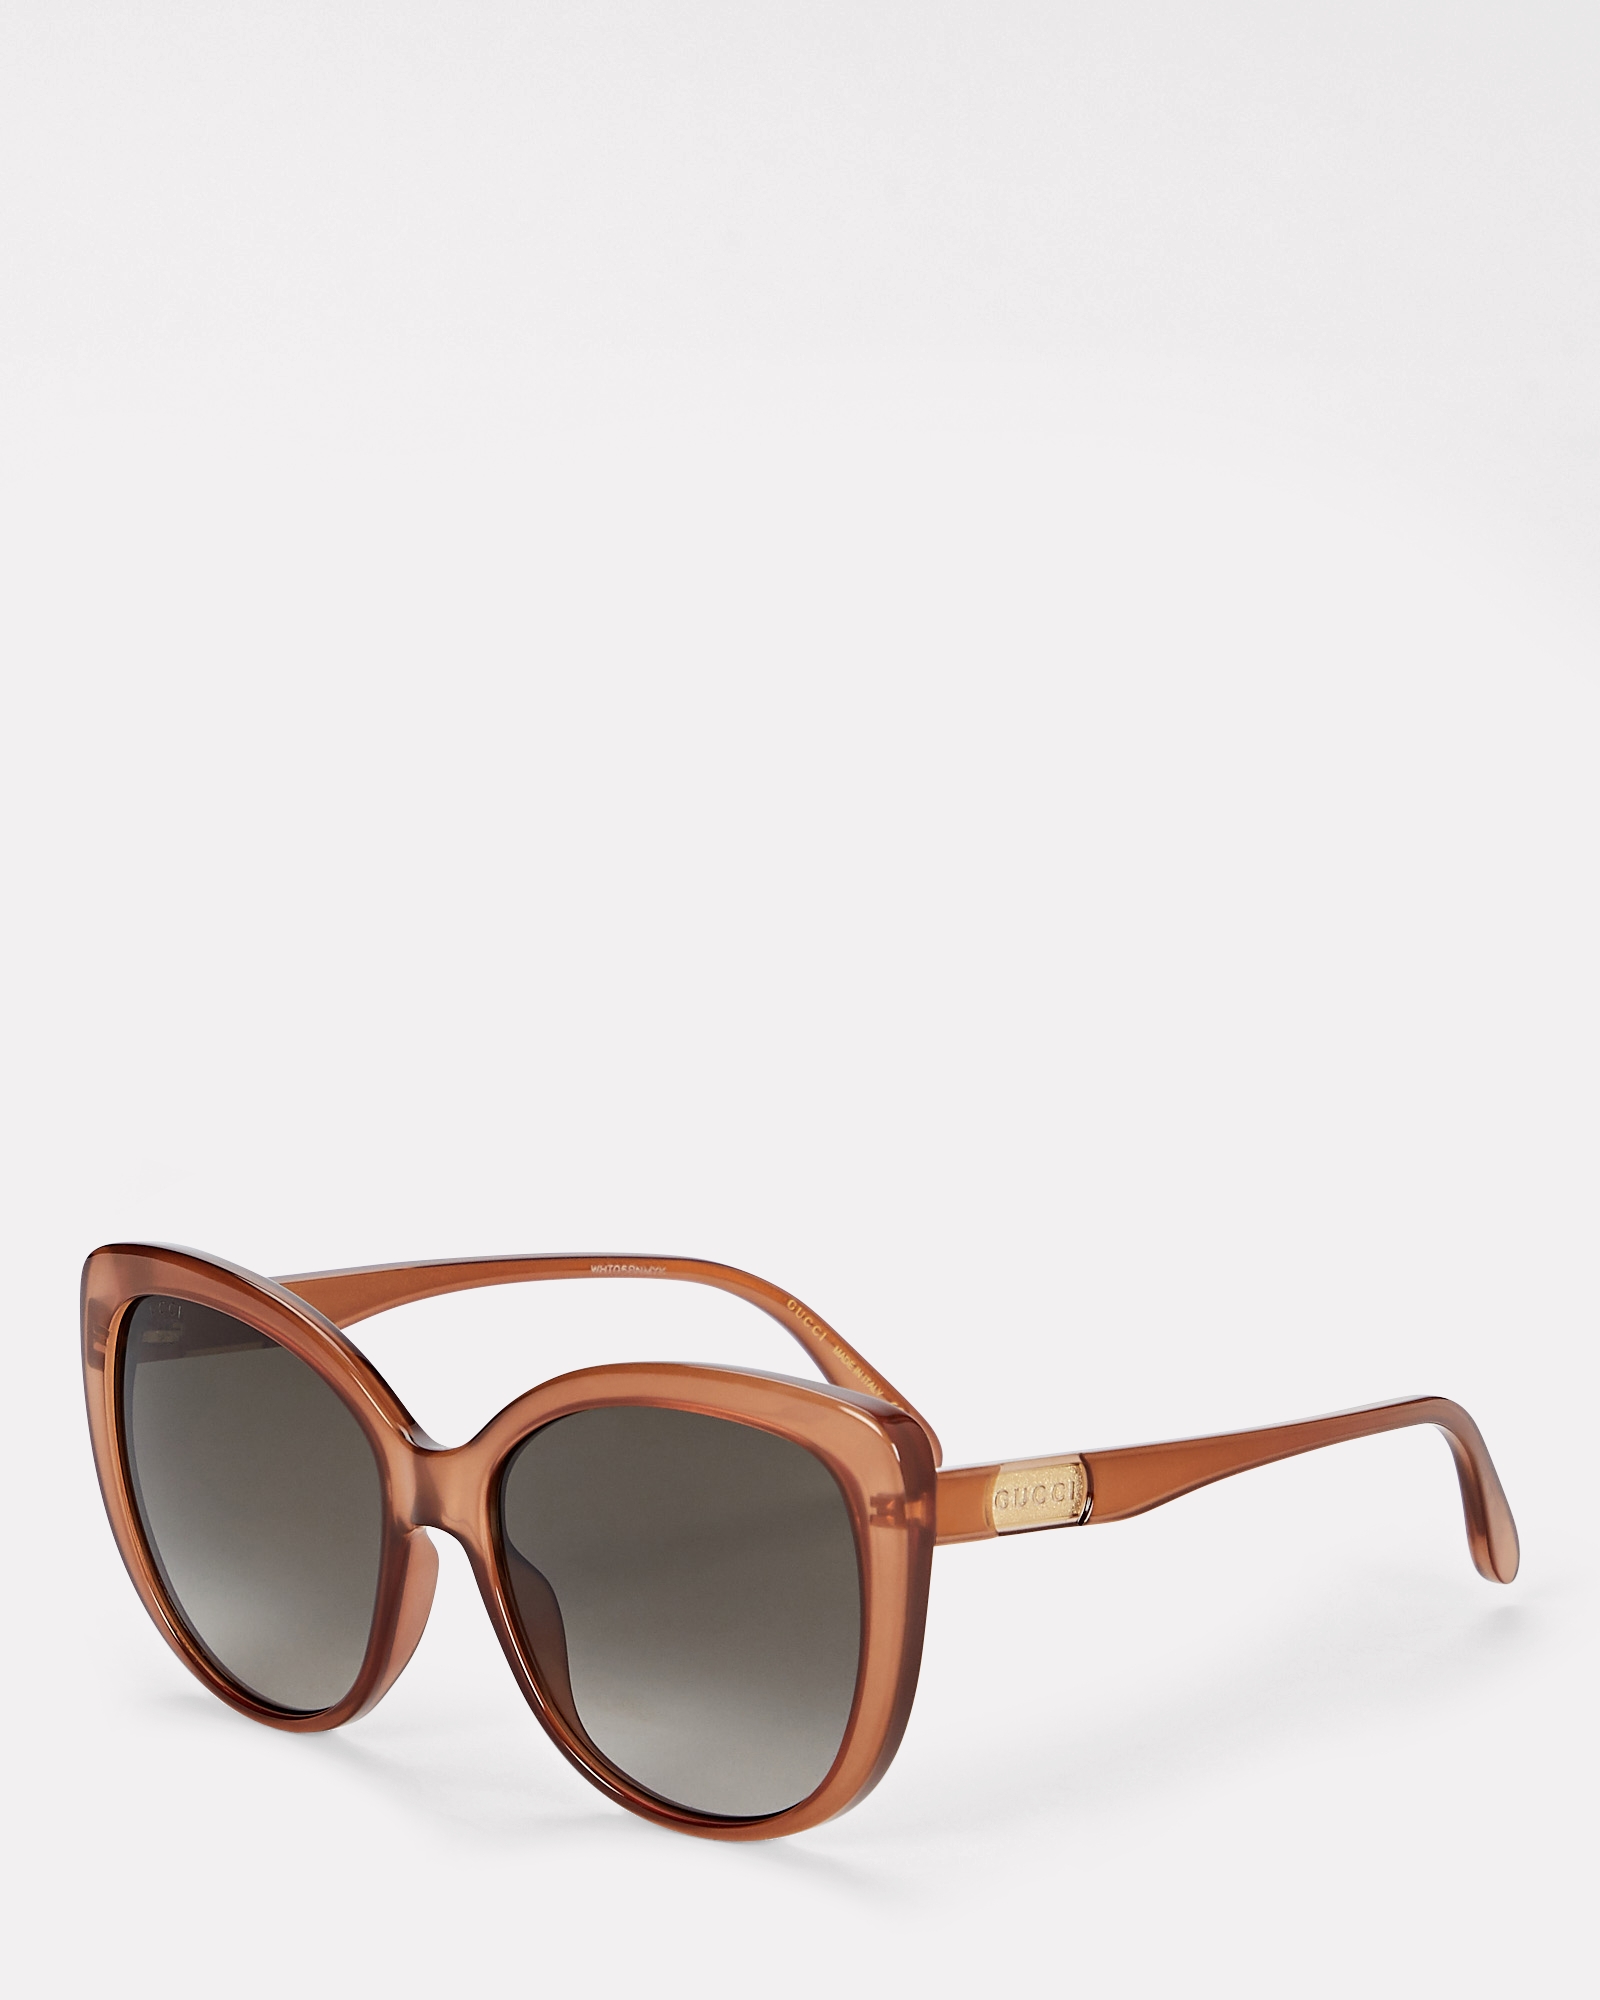 Gucci Oversized Cat Eye Sunglasses | INTERMIX®